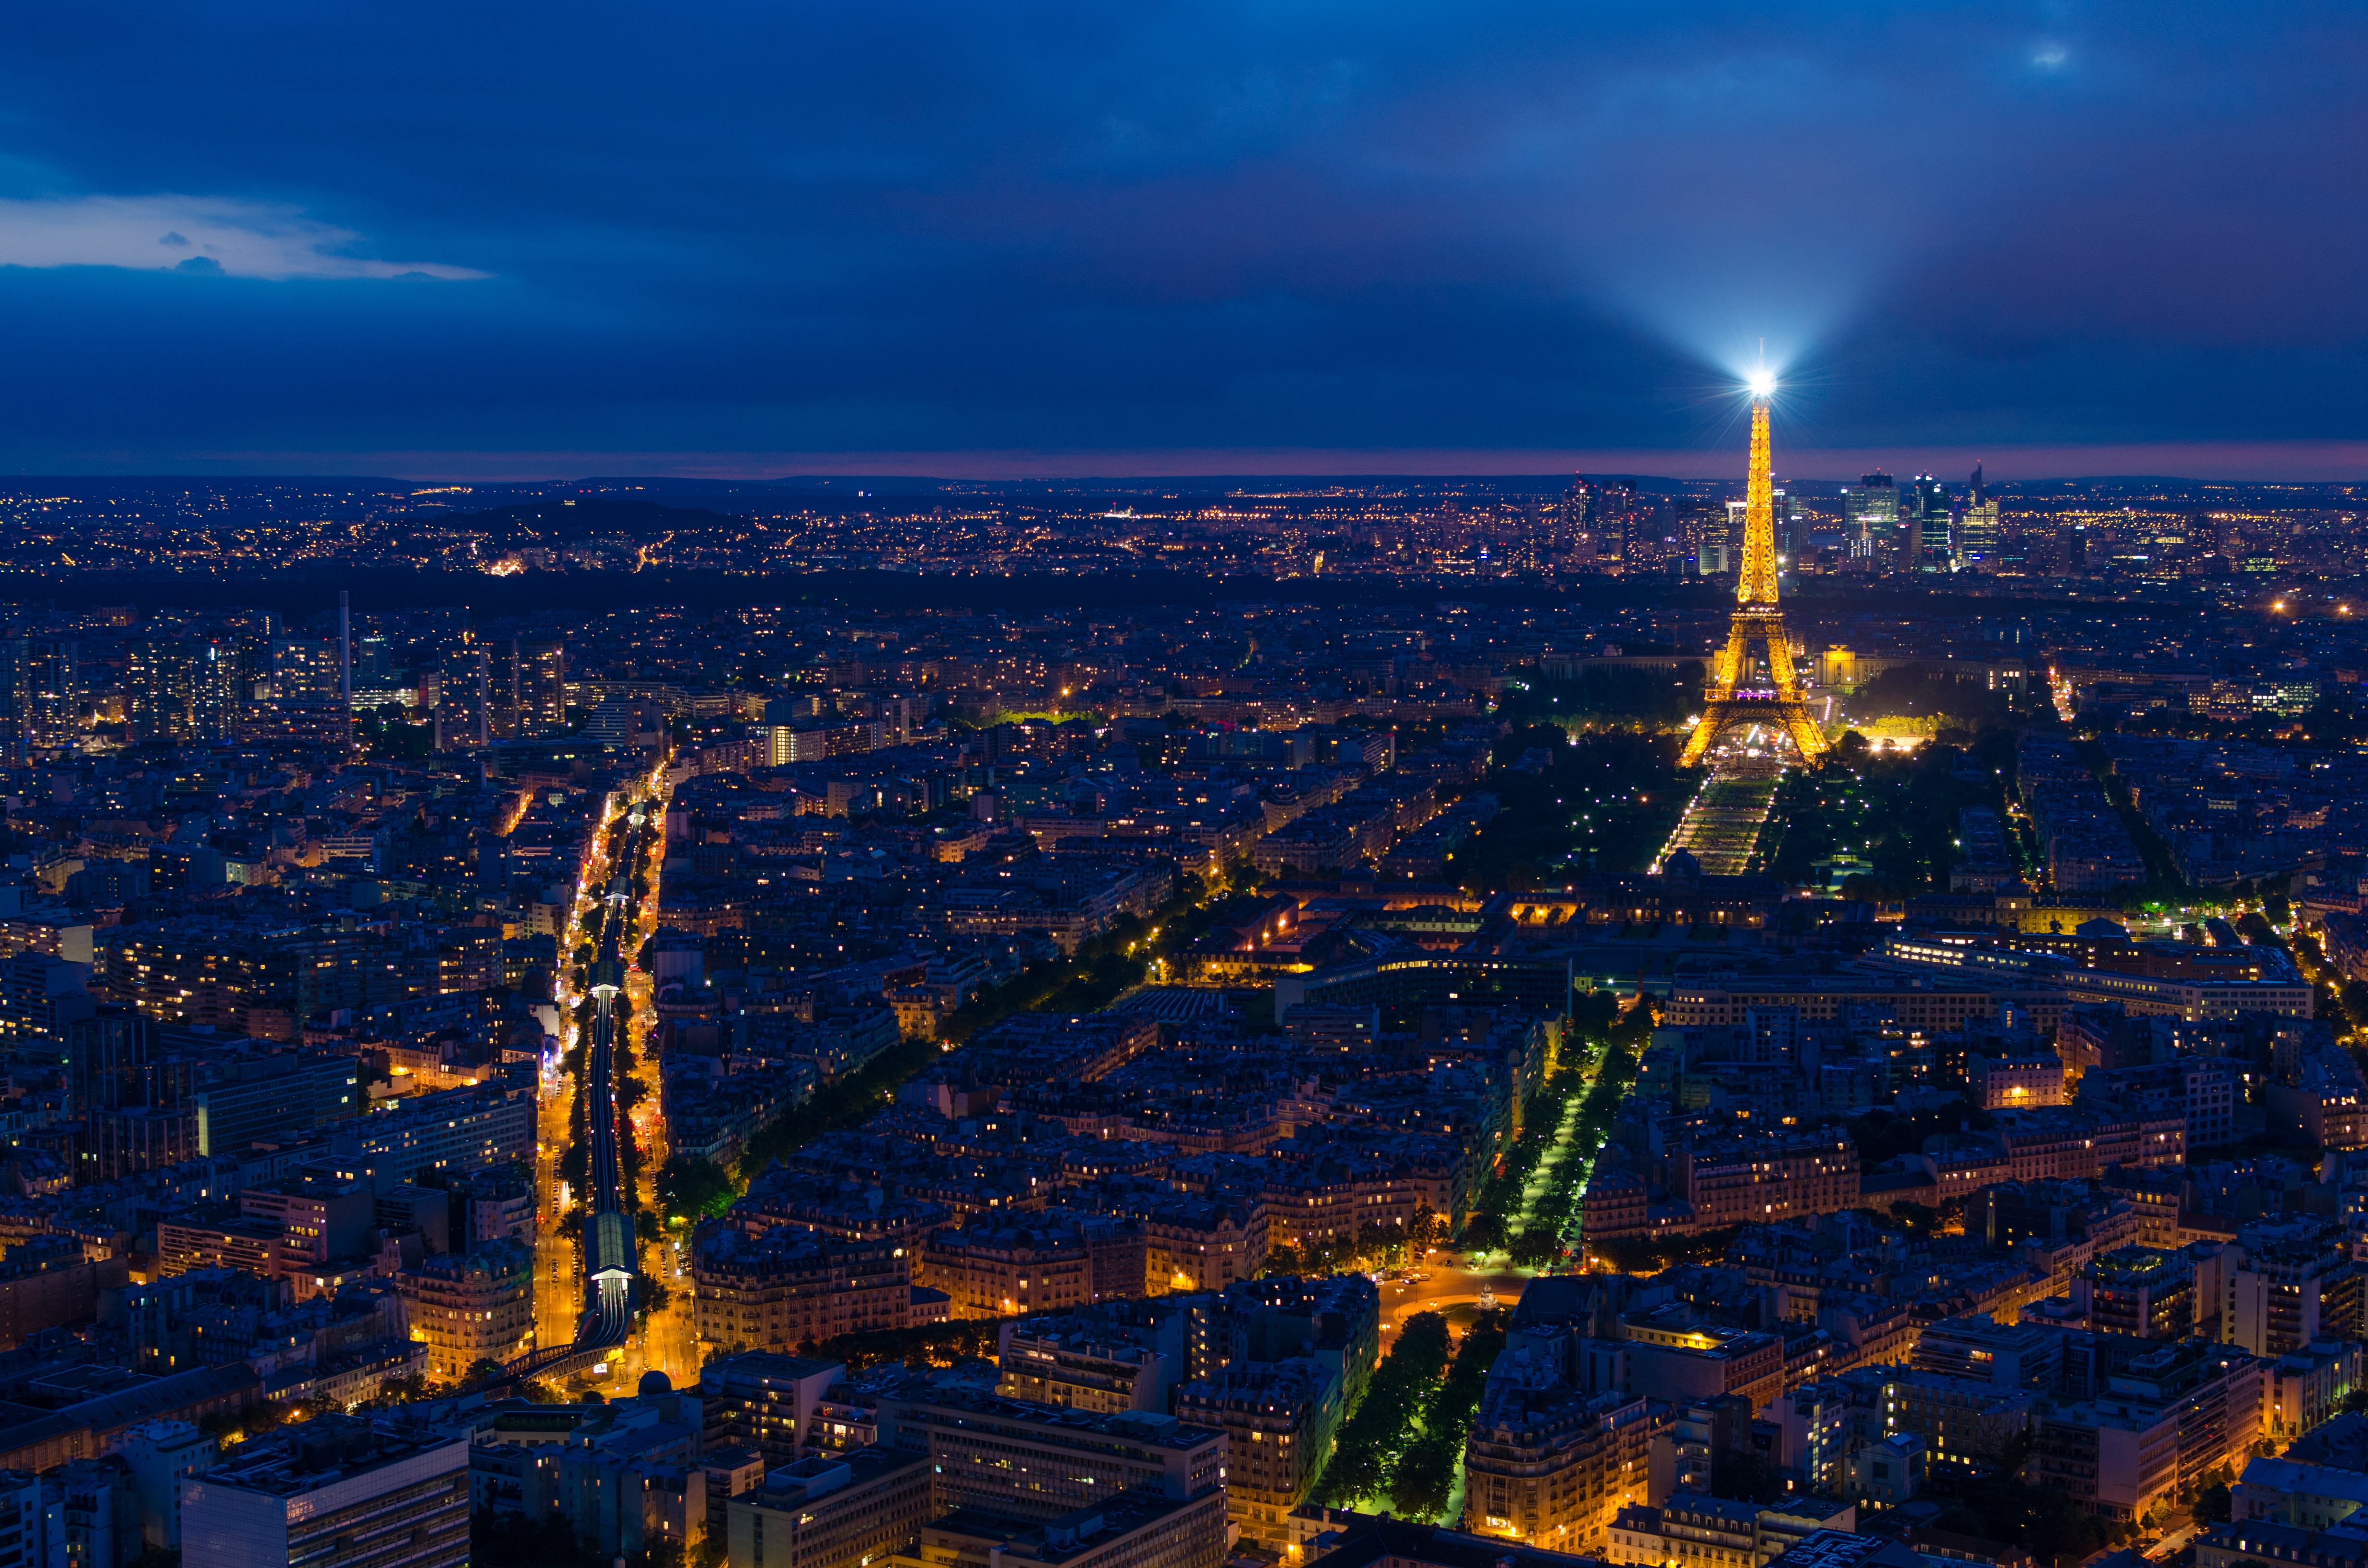 General 4928x3264 Eiffel Tower Paris night city lights 500px